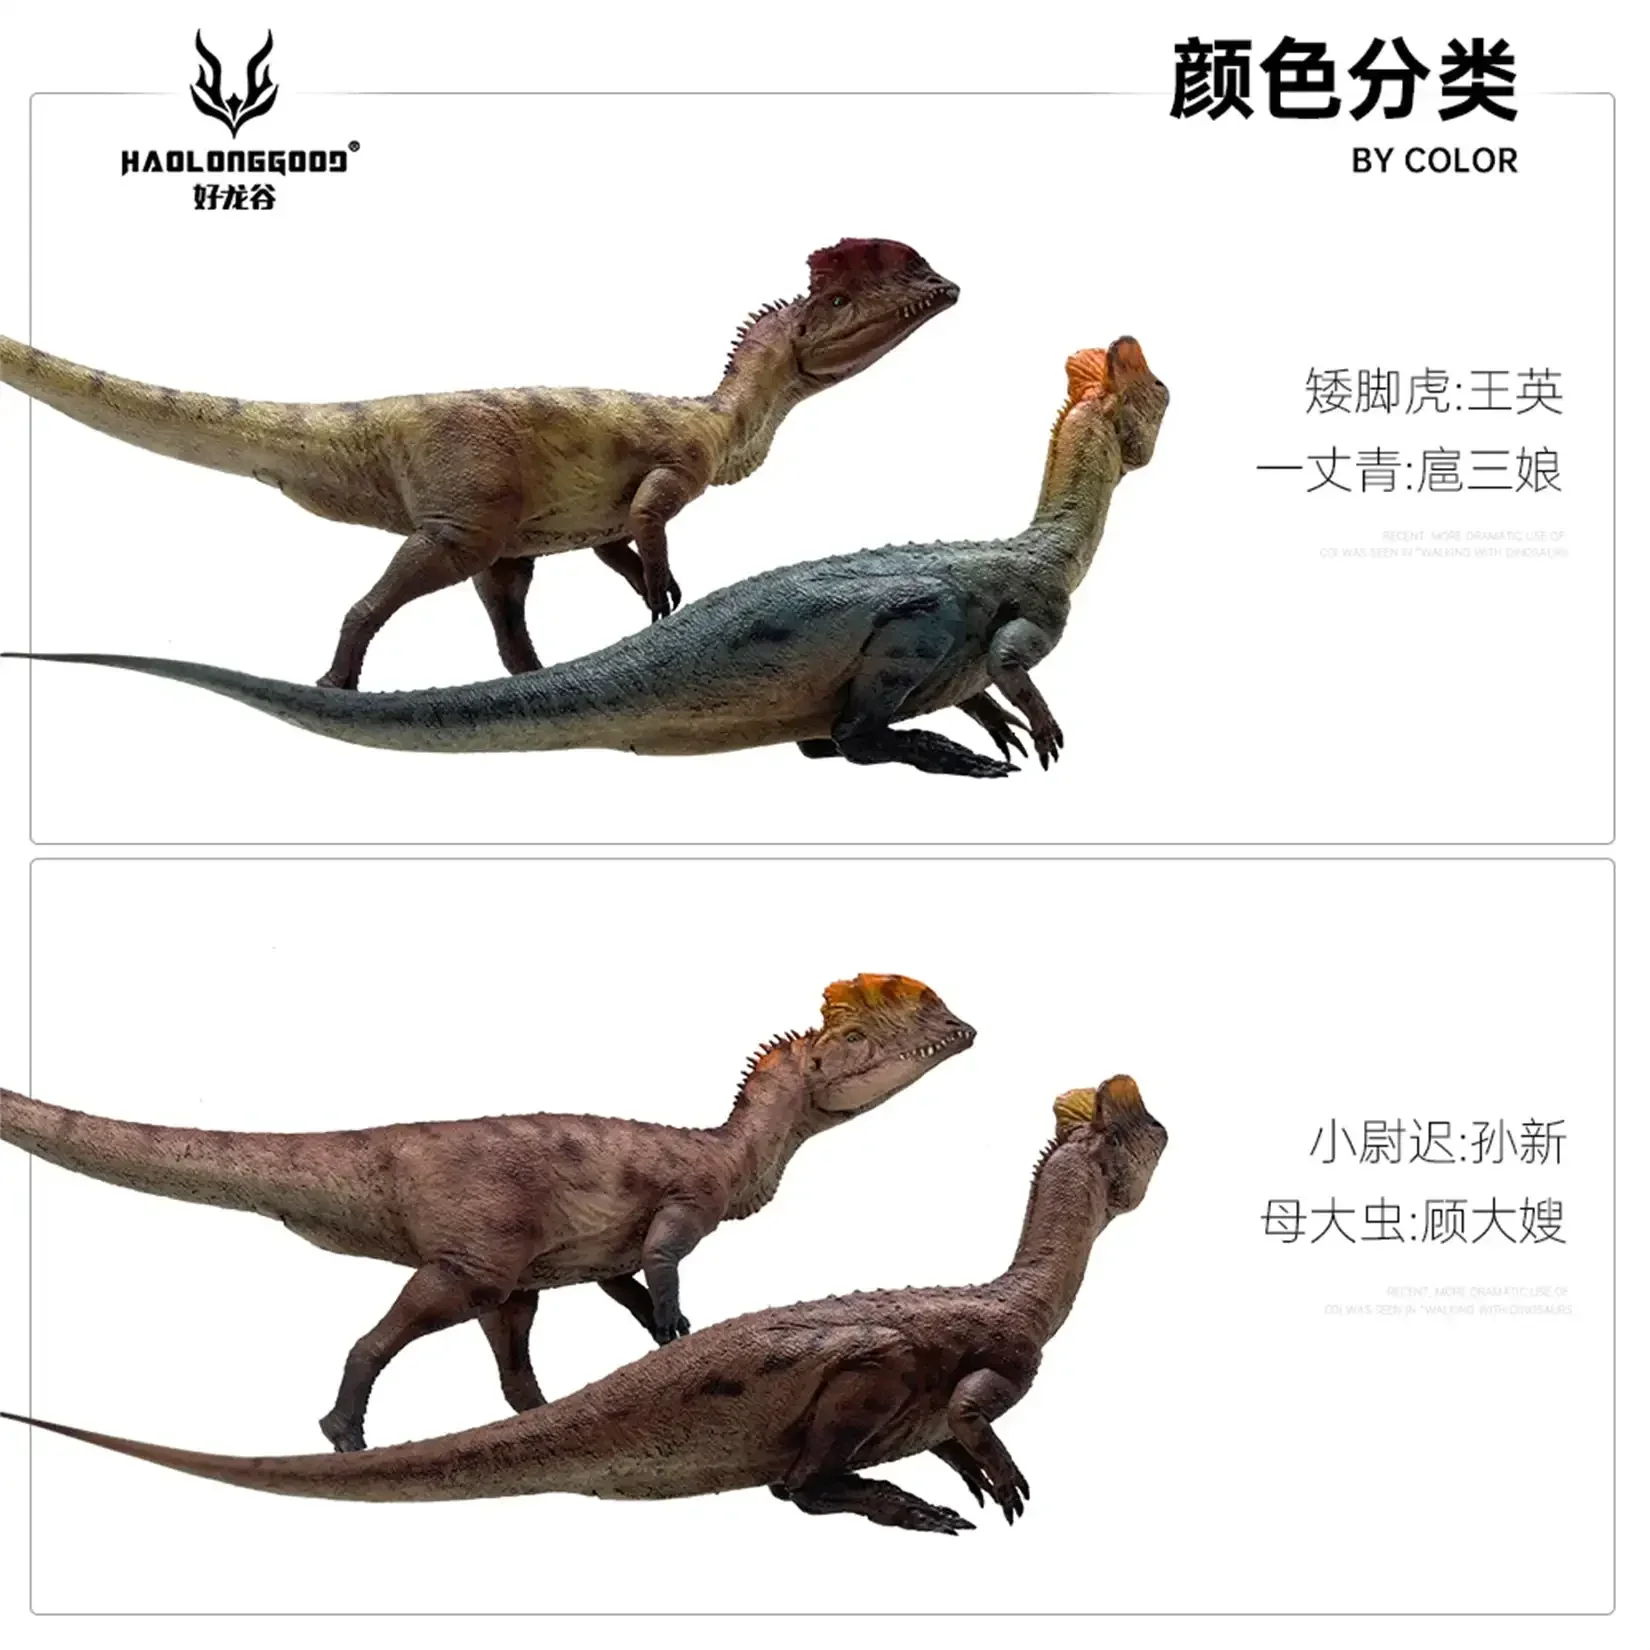 

HAOLONGGOOD 1:35 Scale Dilophosaurus Pair Model Theropoda Dinosaur Animal Collection Decoration GK Birthday Gift Toy